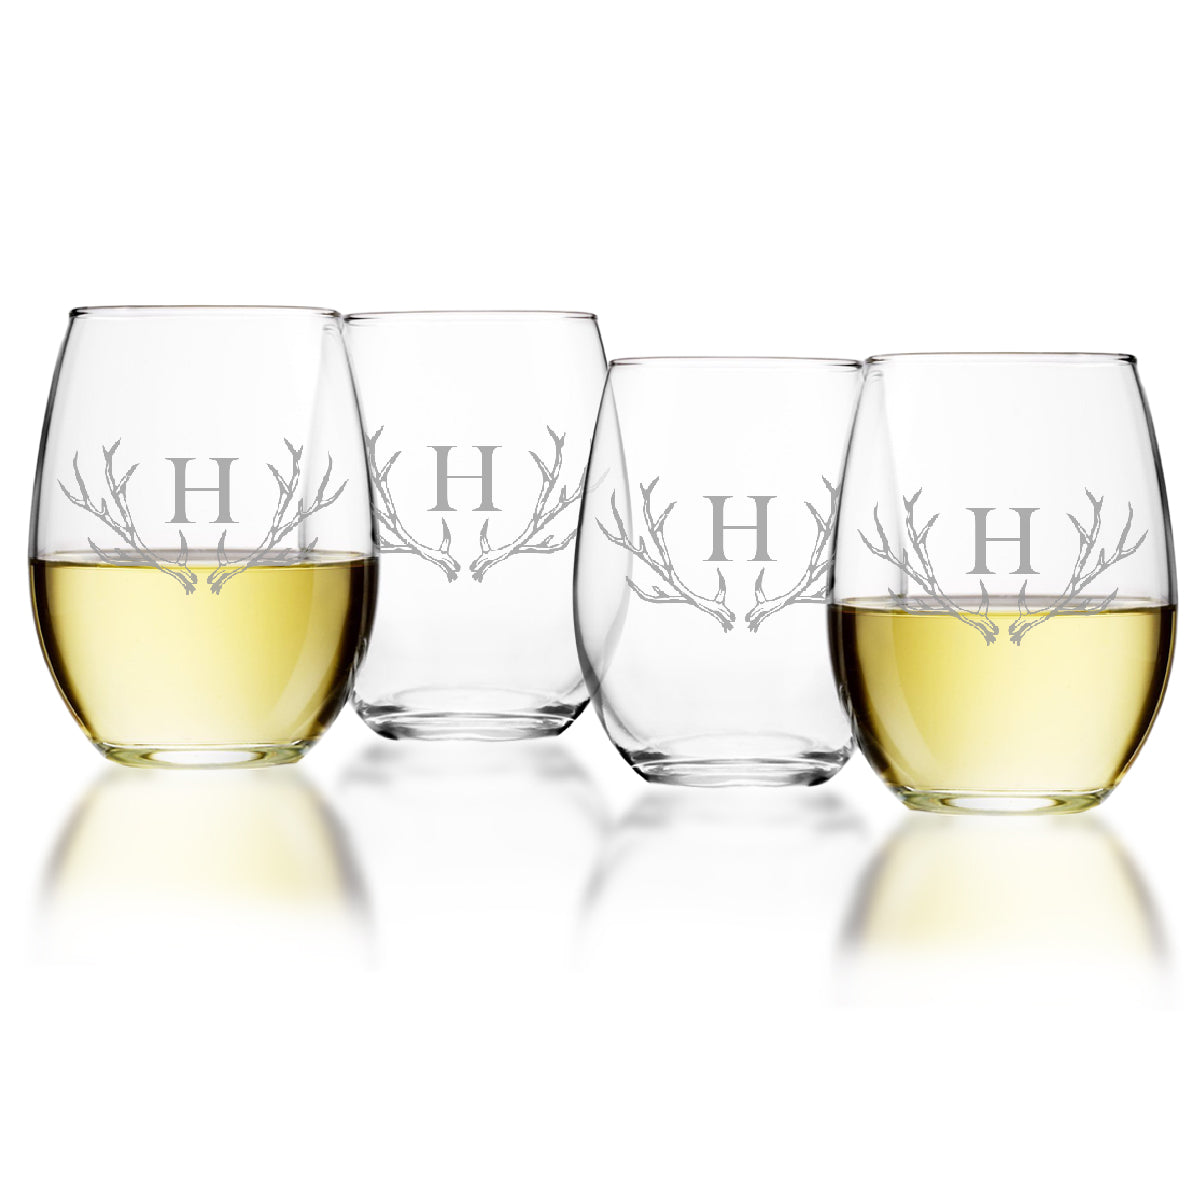 Monogrammed 15oz Stemless Wine Glasses set of 4